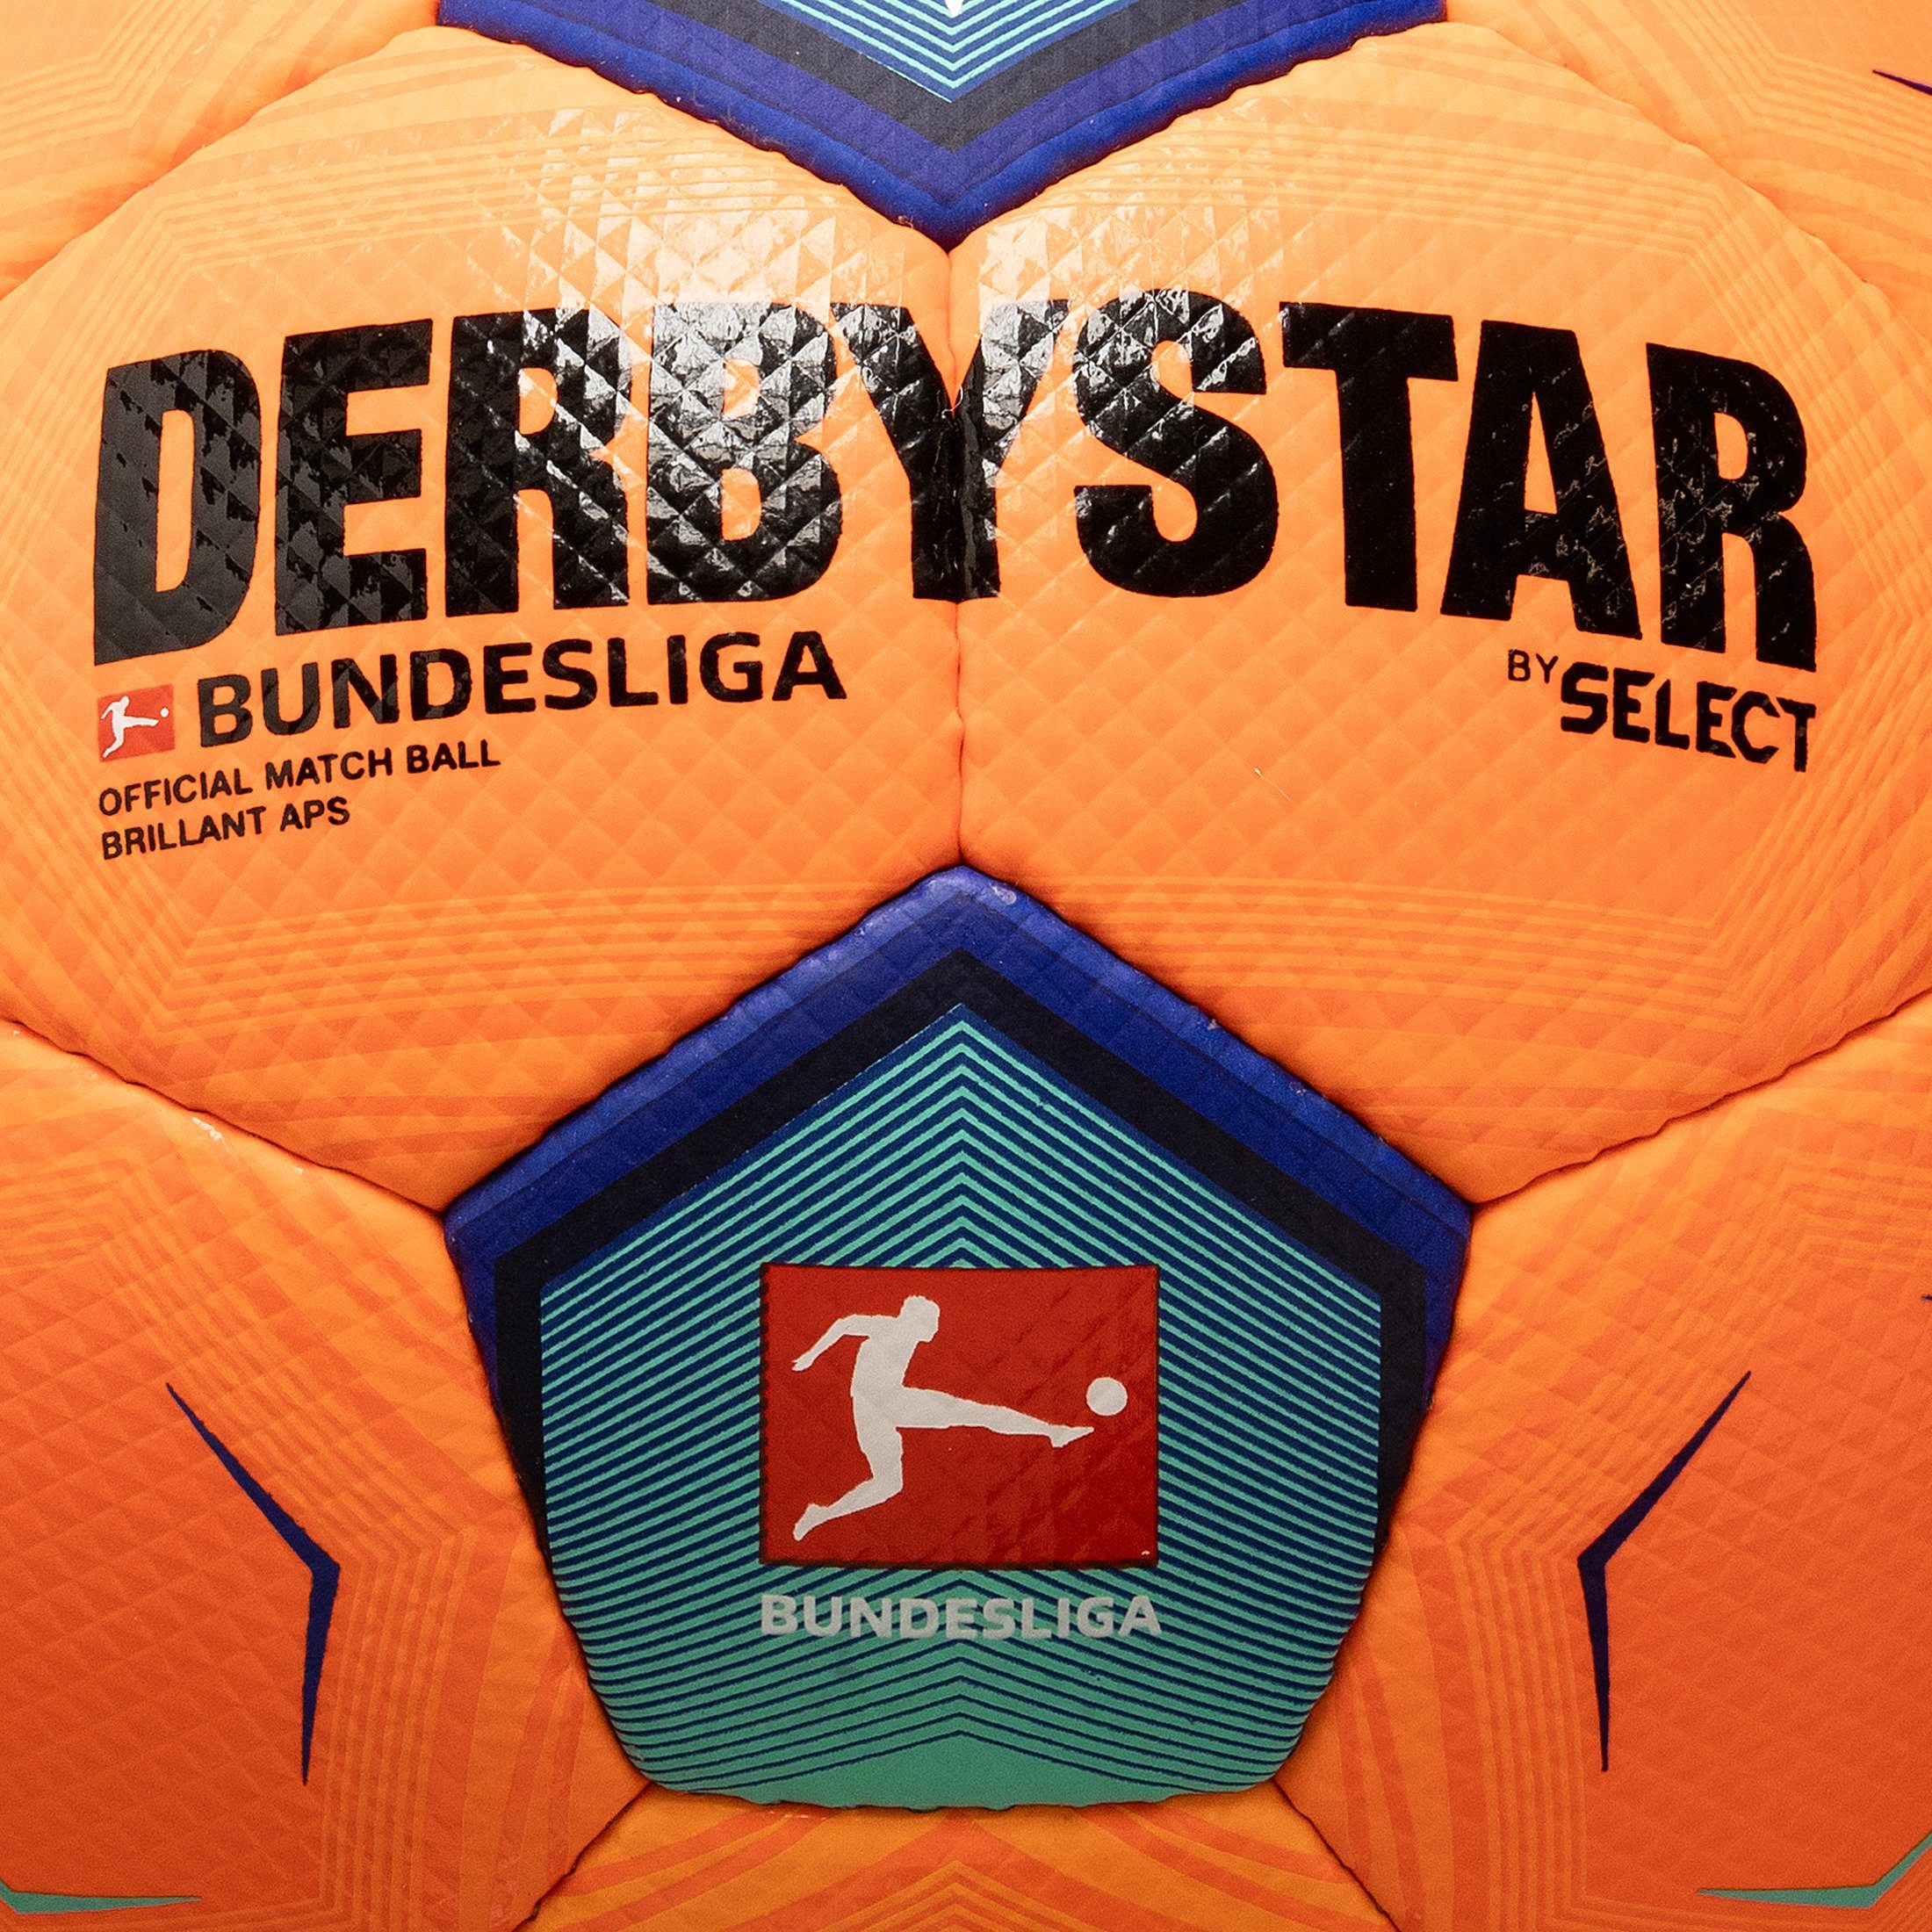 Fußball Derbystar High Visible Fußball Brillant Bundesliga APS v23